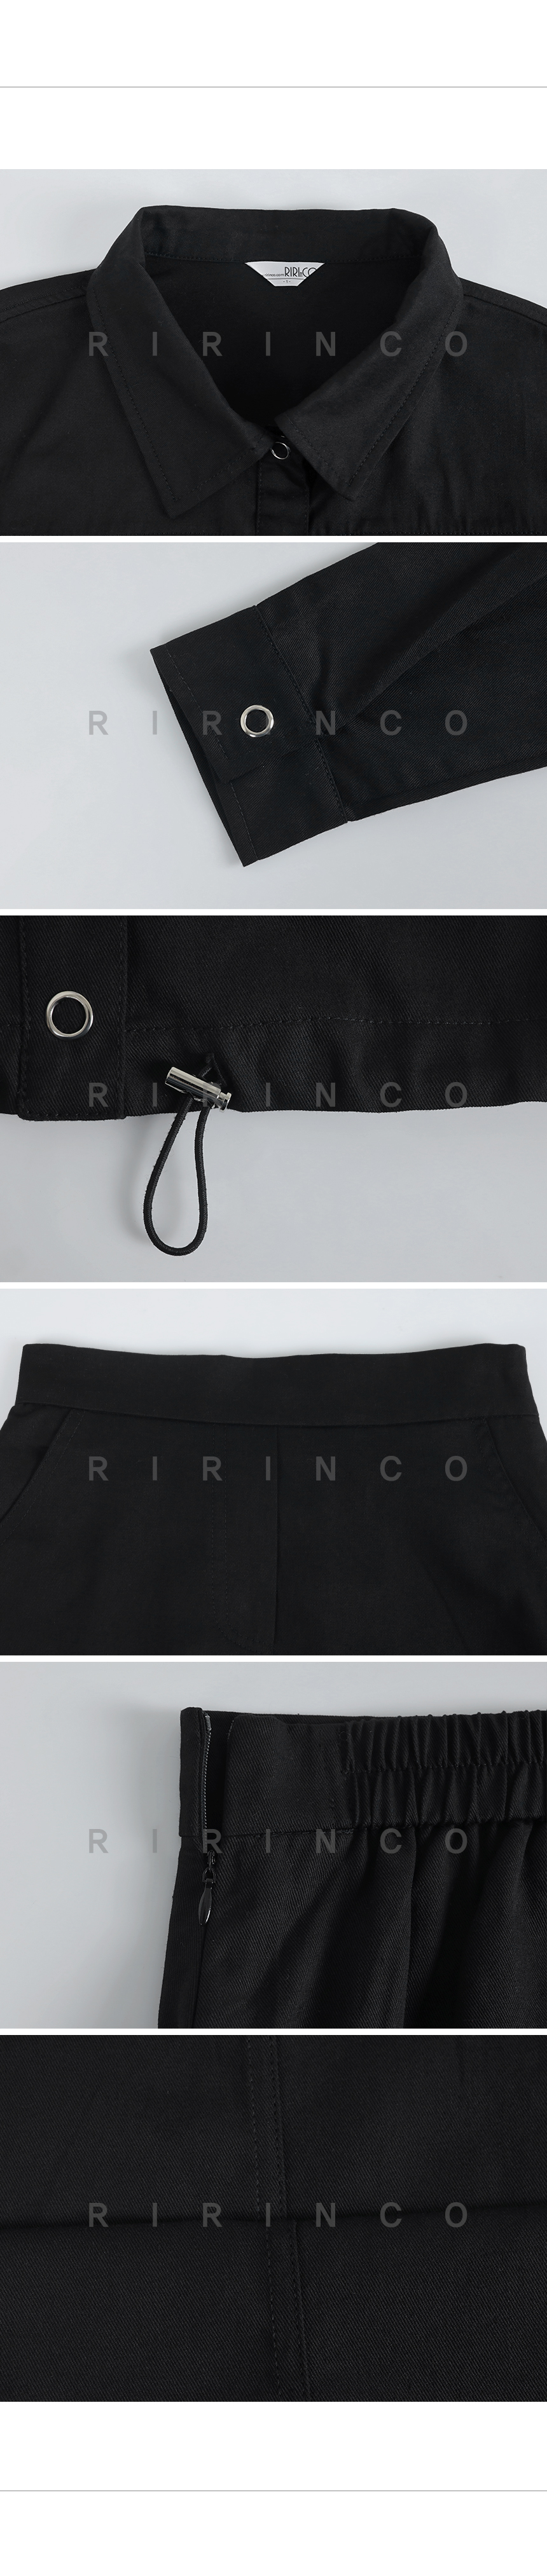 RIRINCO コットンジャケット&後ろゴムスリット入りスカート上下セット